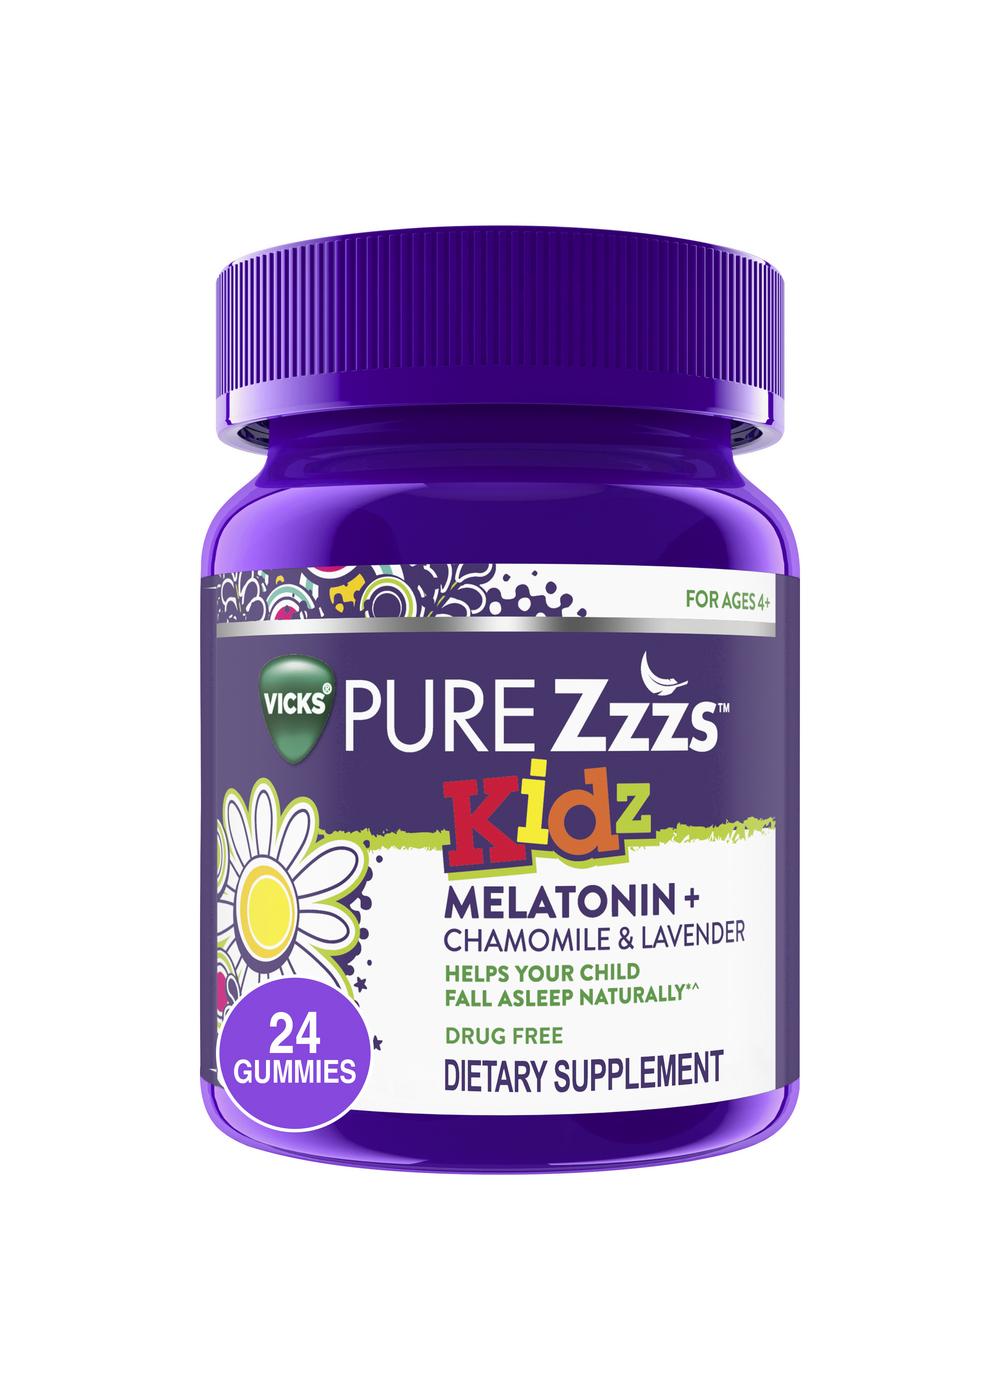 Vicks Pure Zzzs Kidz Melatonin Sleep Aid Gummies; image 1 of 6